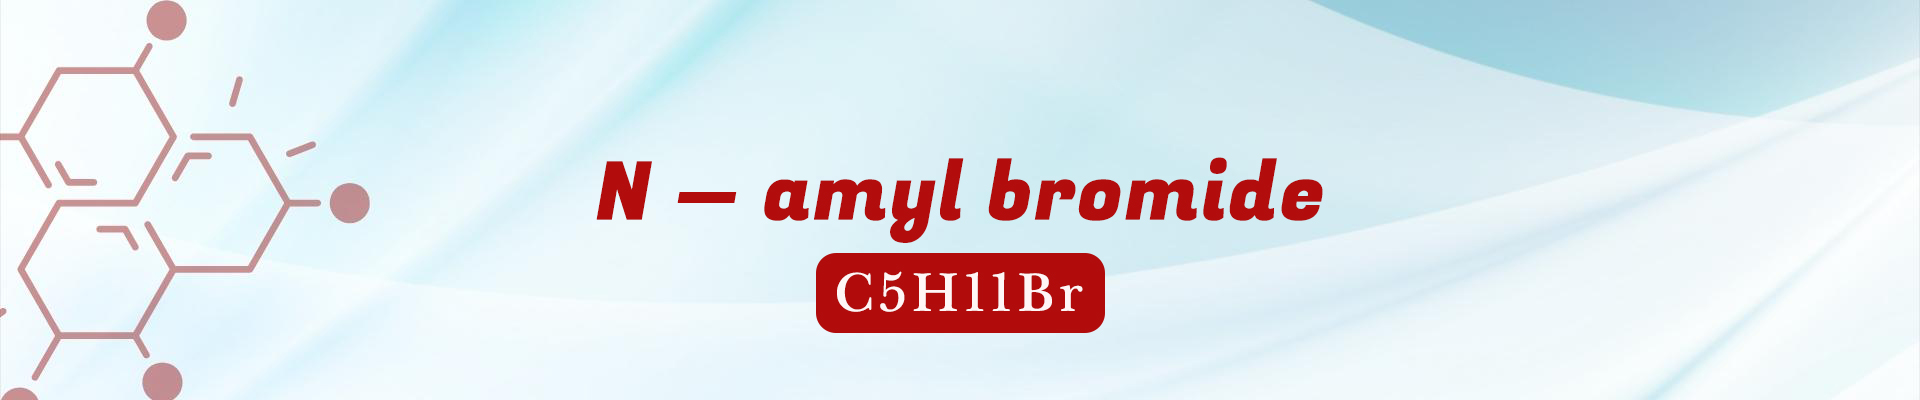 N-Amyl Bromide